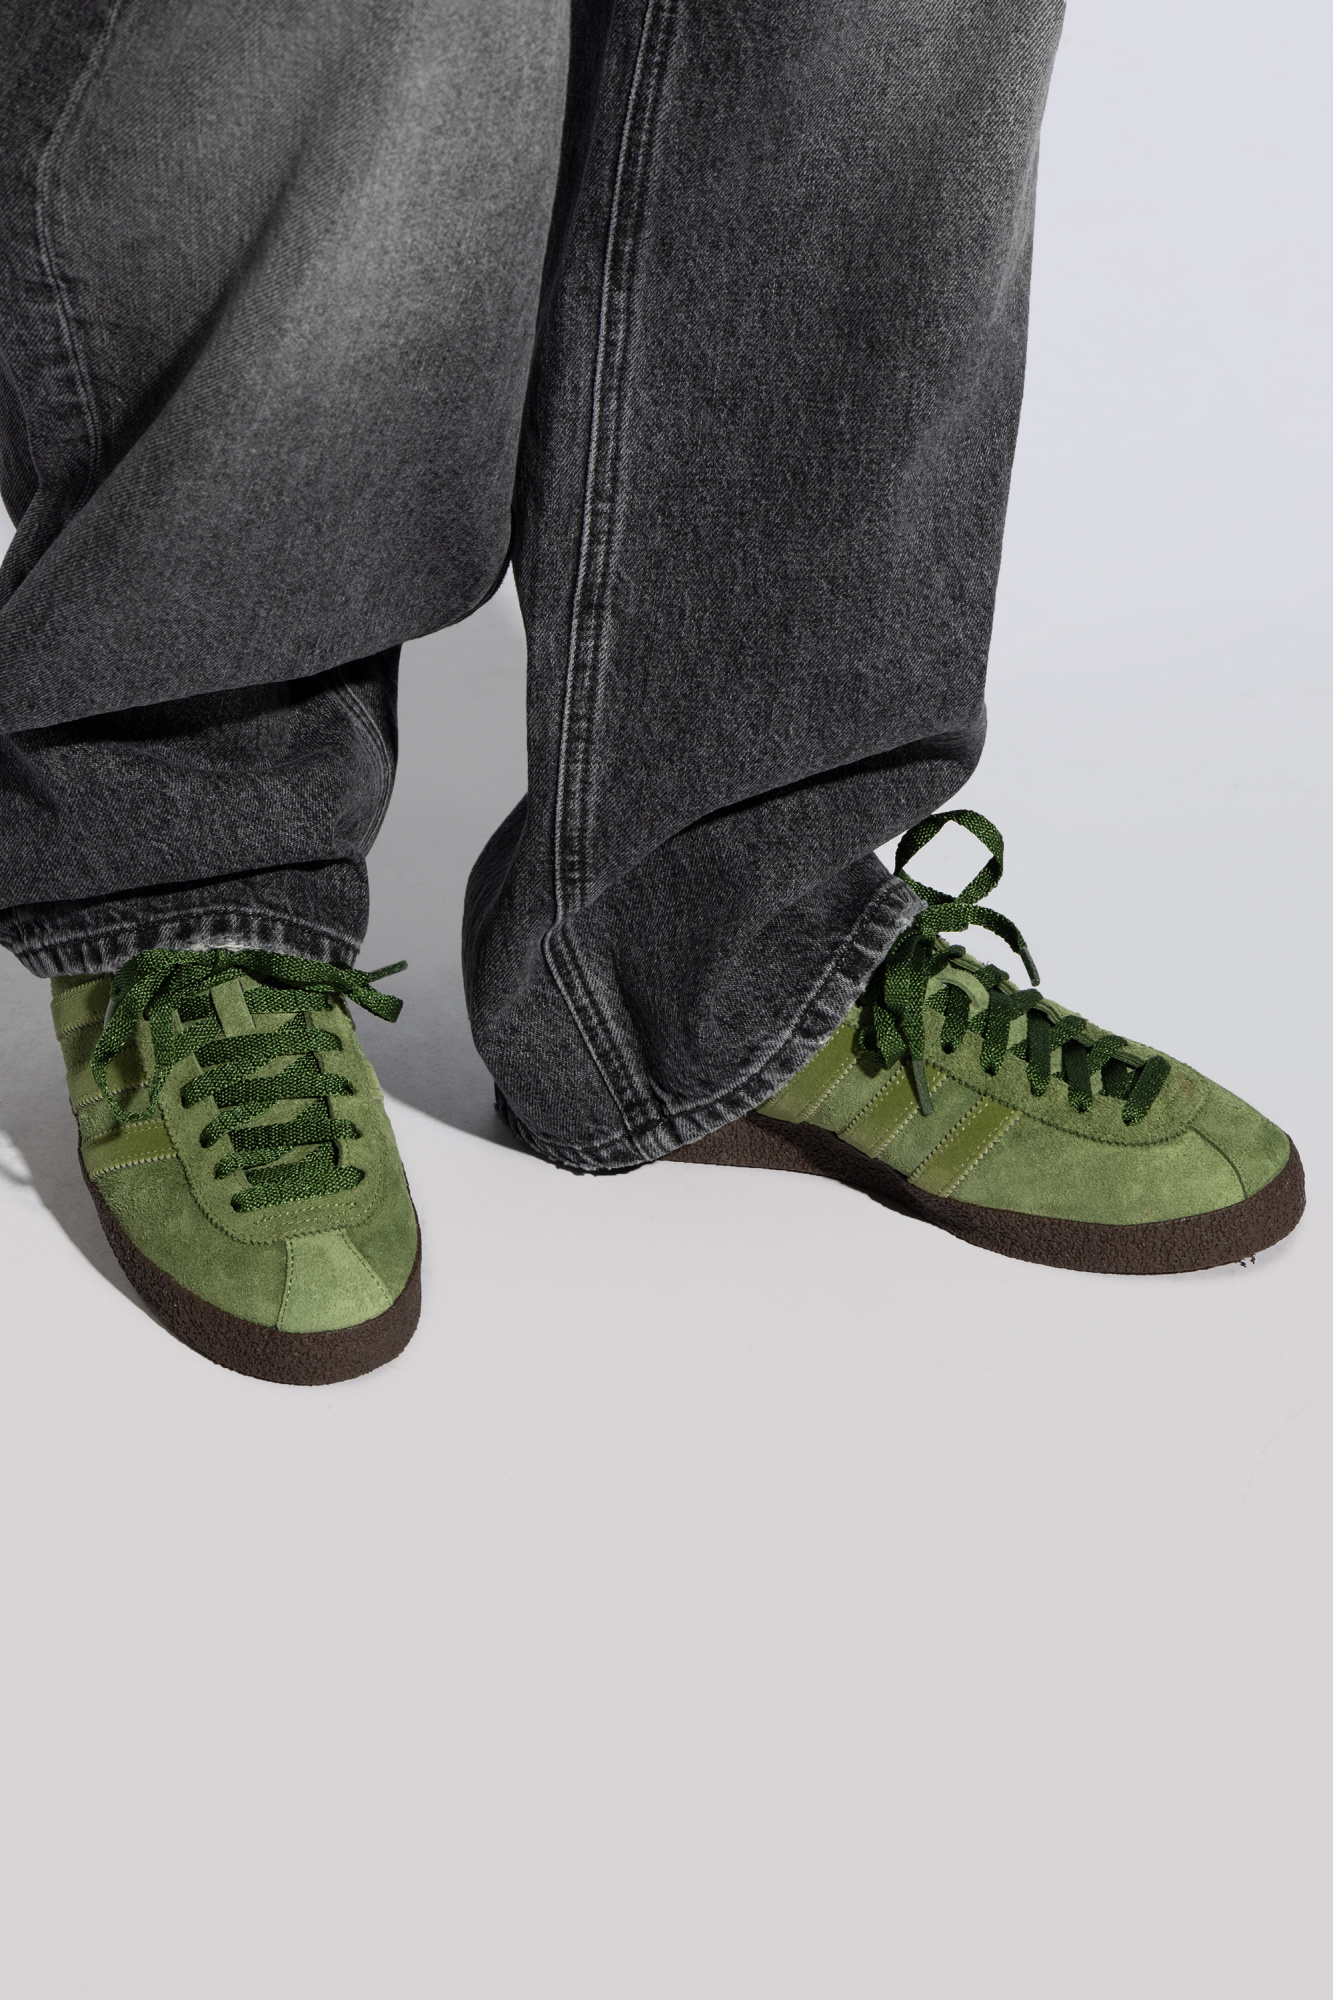 ADIDAS Originals Sports shoes `Ardwick SPZL` | Men's Shoes | Vitkac